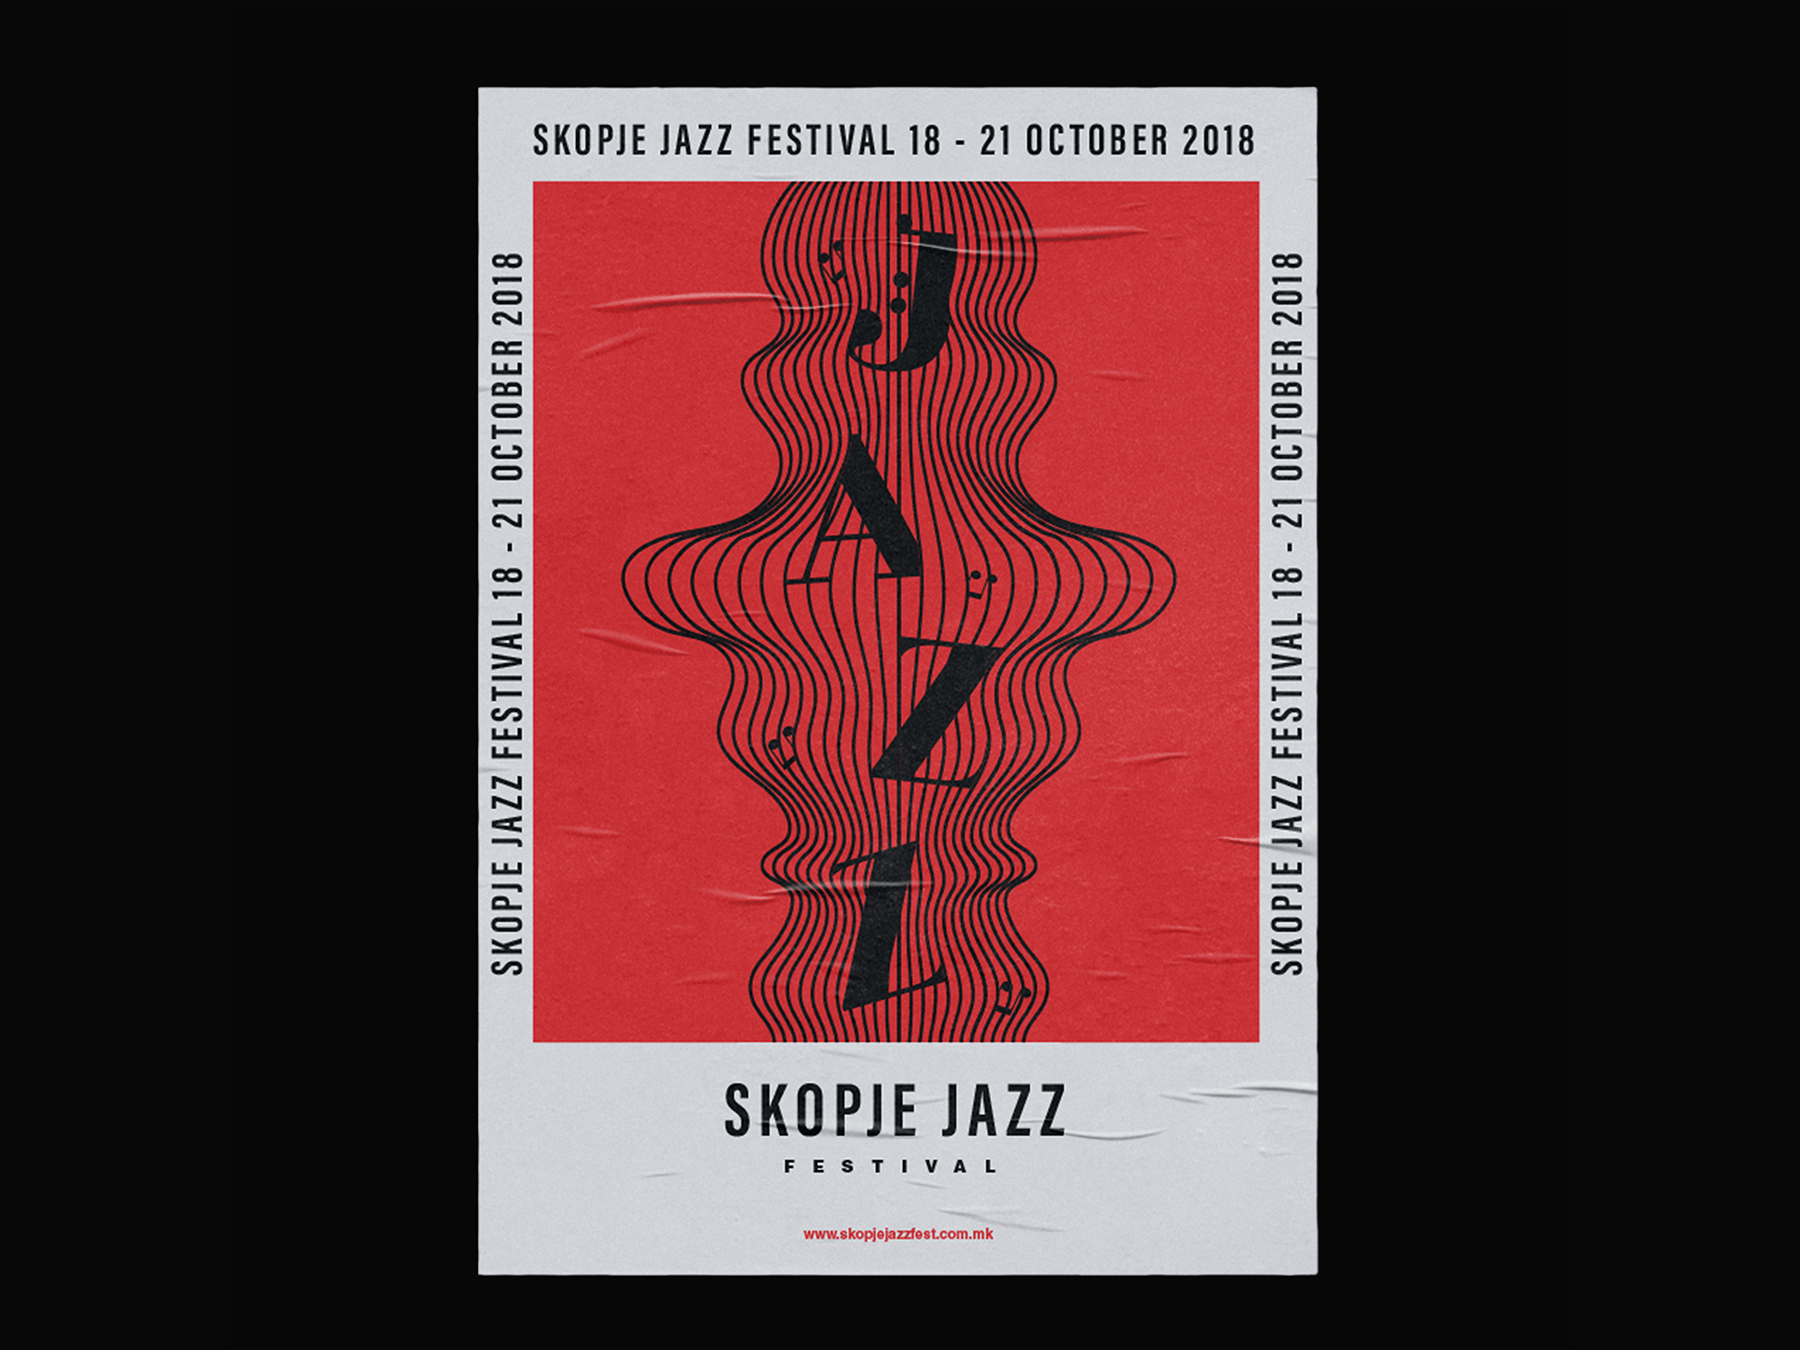 Skopje Jazz Festival Poster by Antonio Stojceski on Dribbble